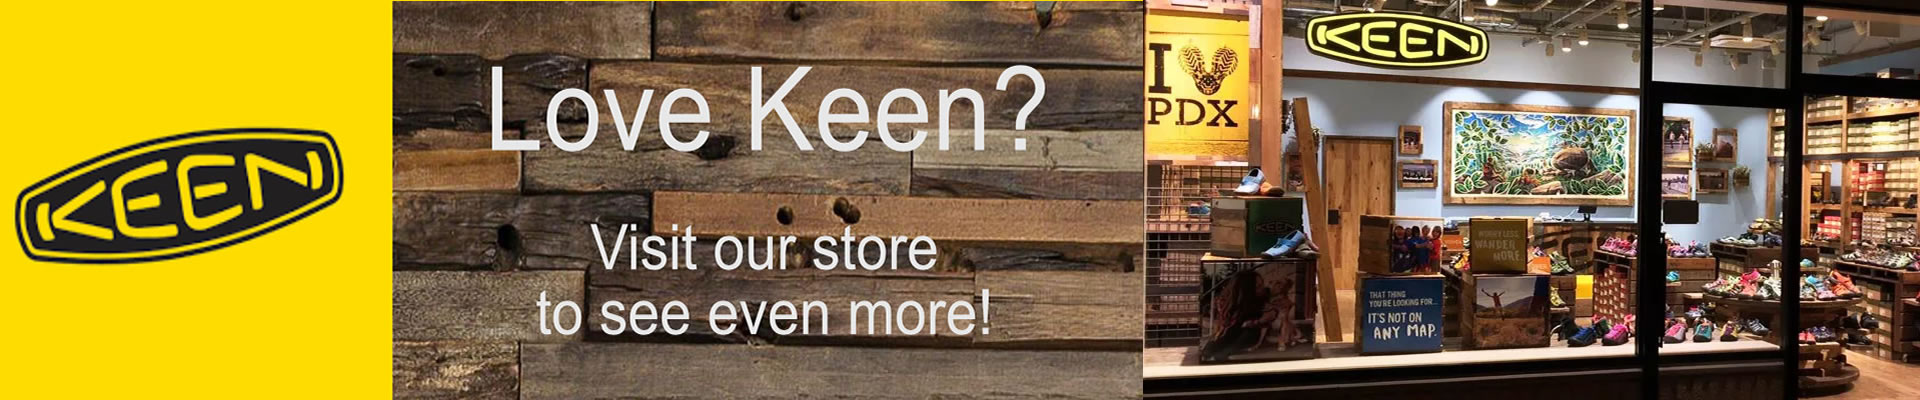 Keen Shoes Shop